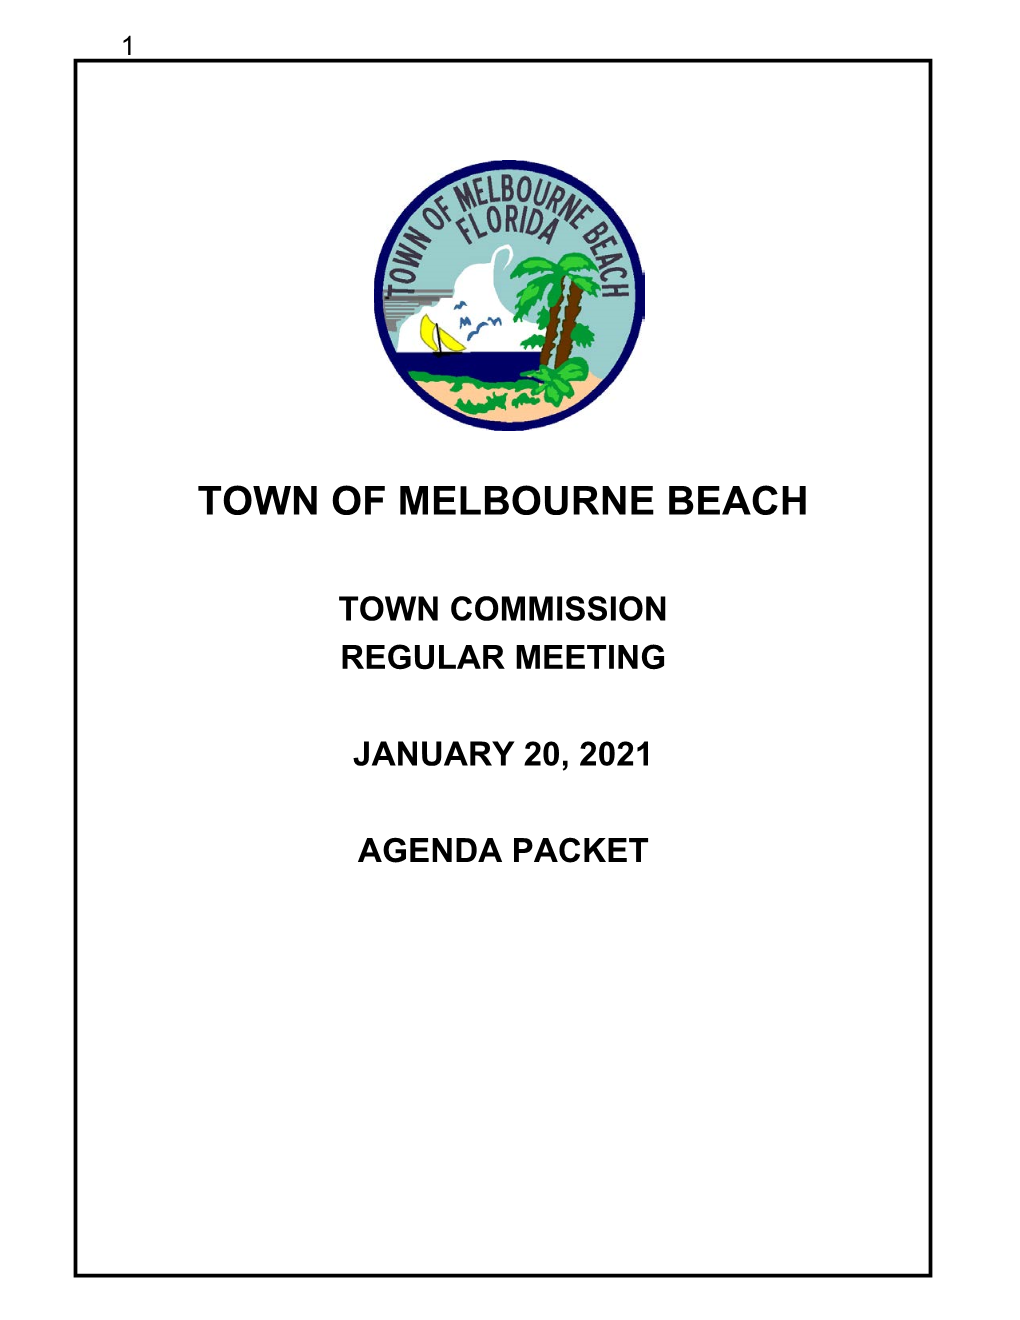 Regular Town Commission Meeting Agenda